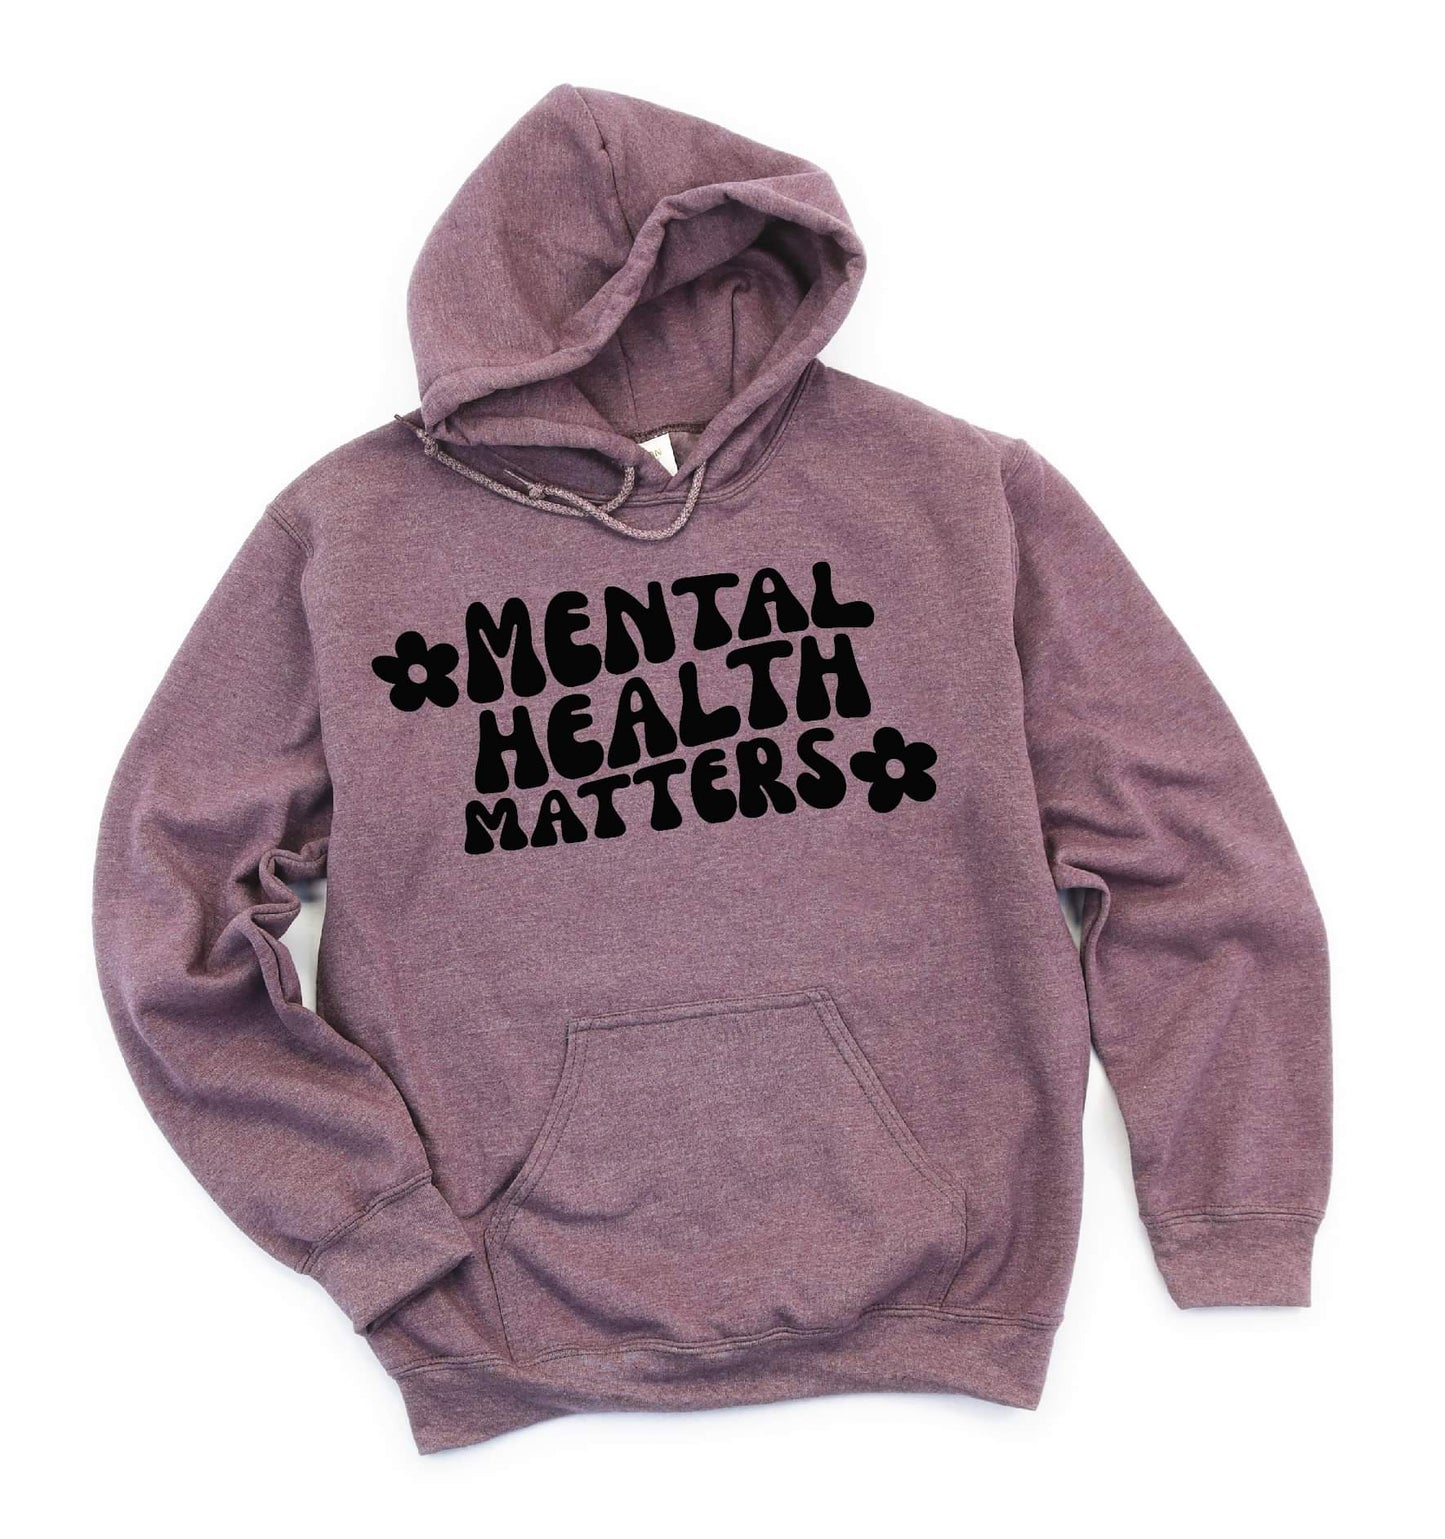 Mental Health Matters - hooded sweatshirt